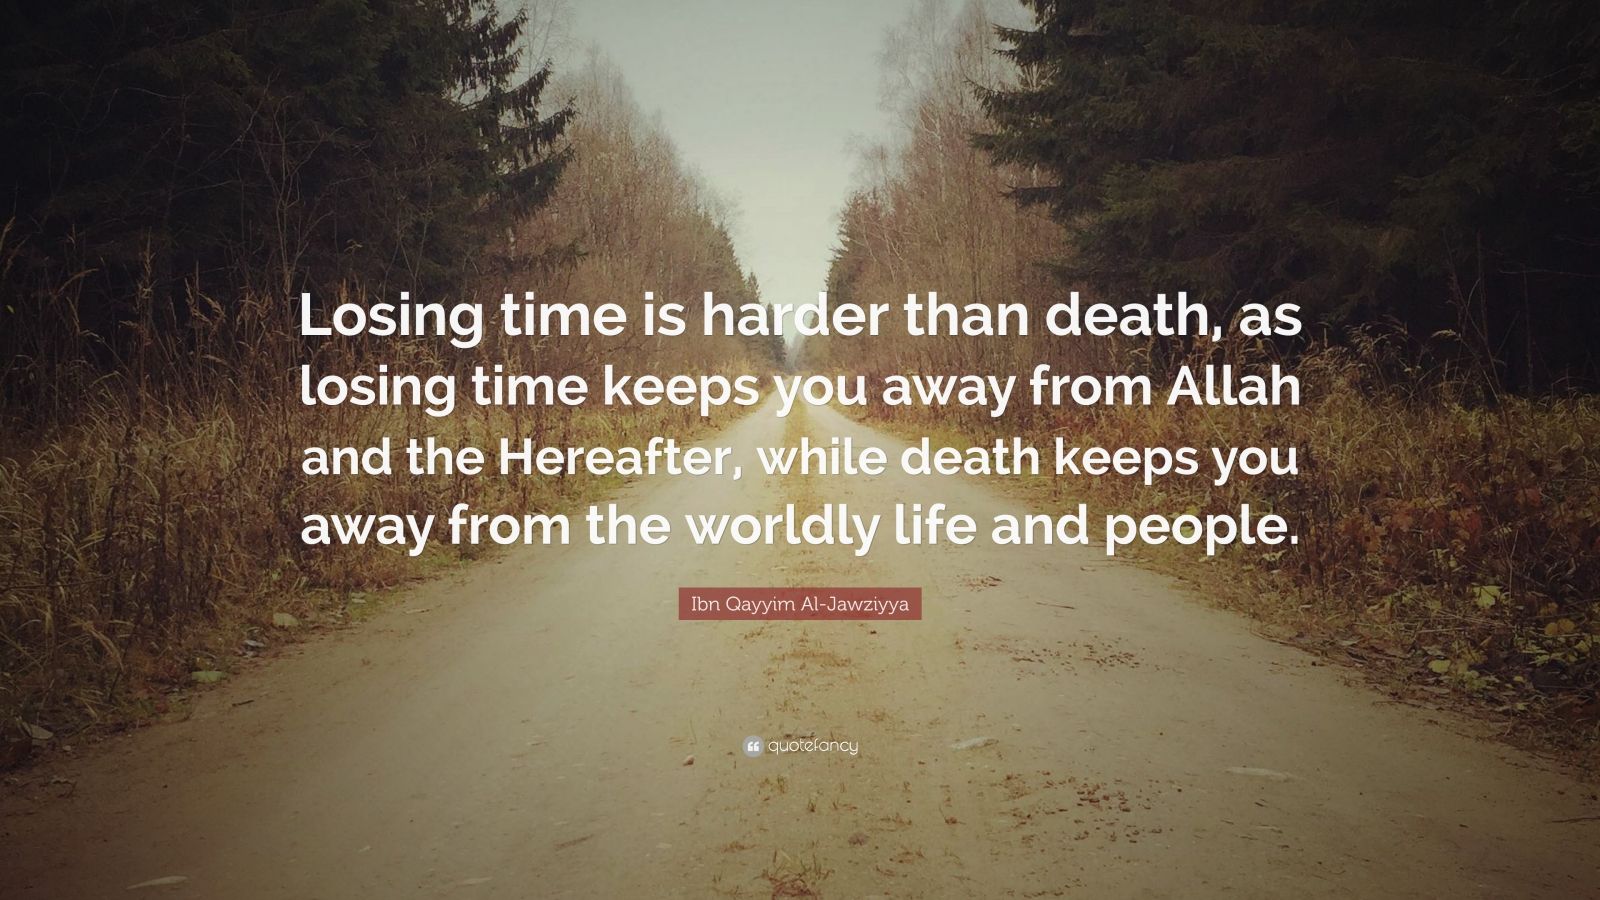 Ibn Qayyim Al-Jawziyya Quote: “Losing time is harder than death, as ...